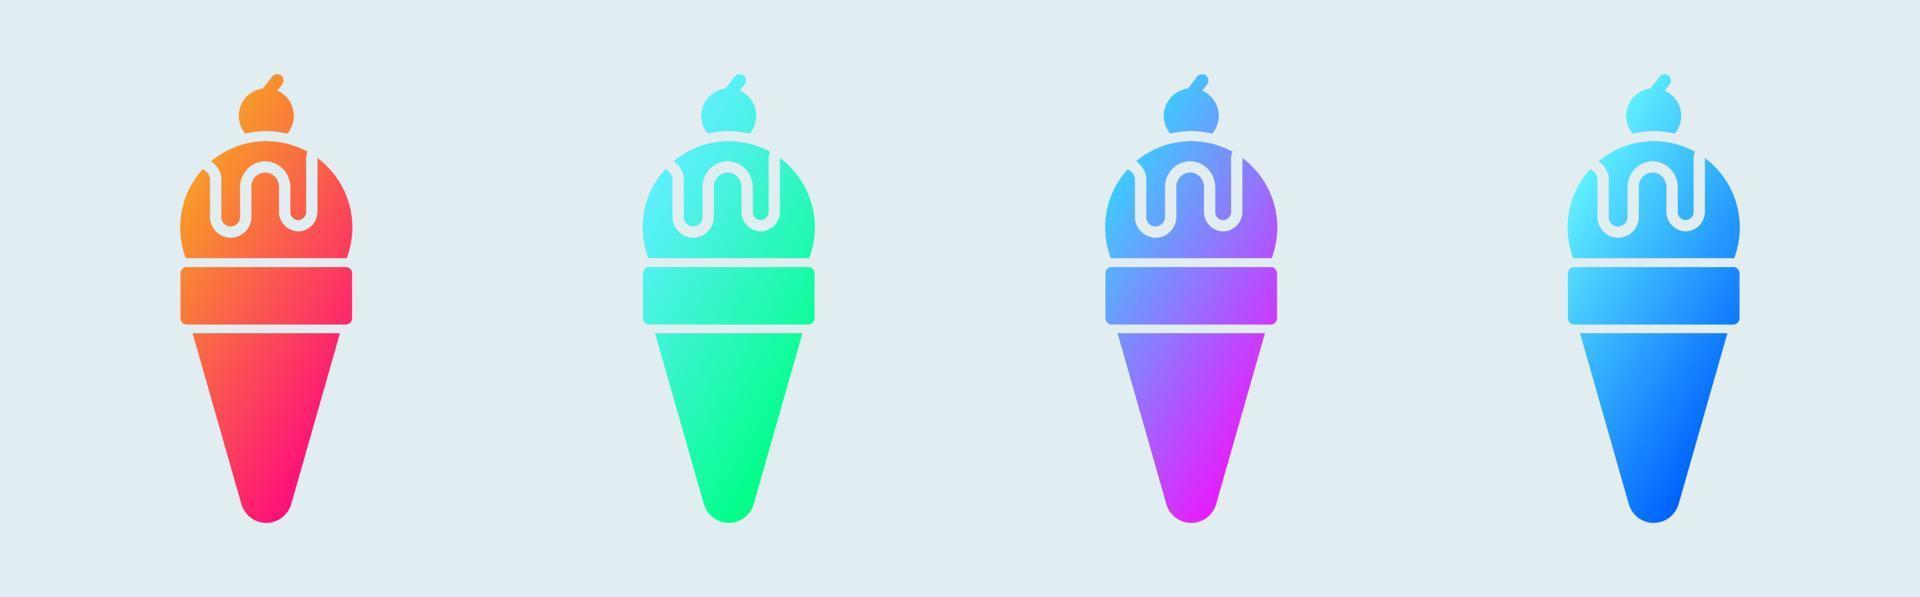 Ice cream solid icon in gradient colors. Cone signs vector illustration.